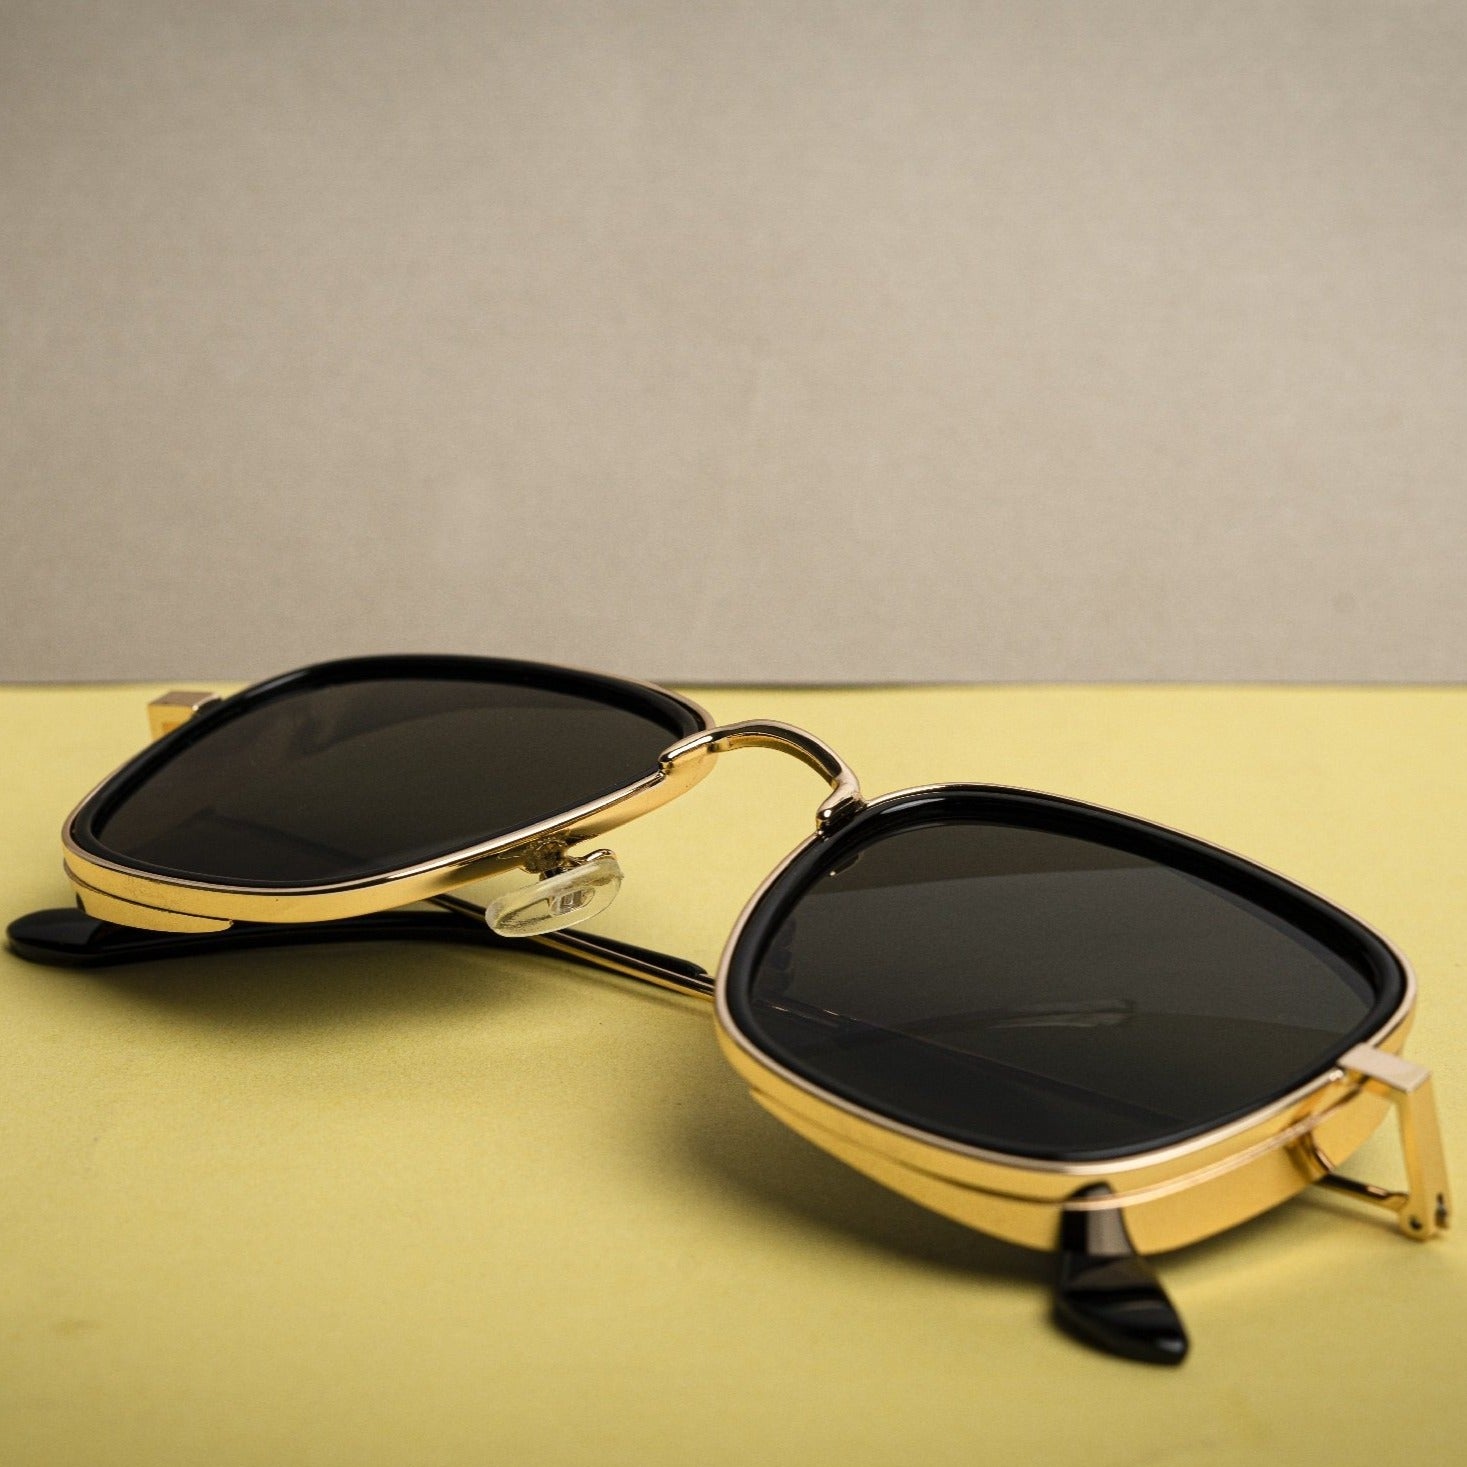 Geometric Metal Frame Colored Mirror Lens Hexagonal Oversize Sunglasses 66mm